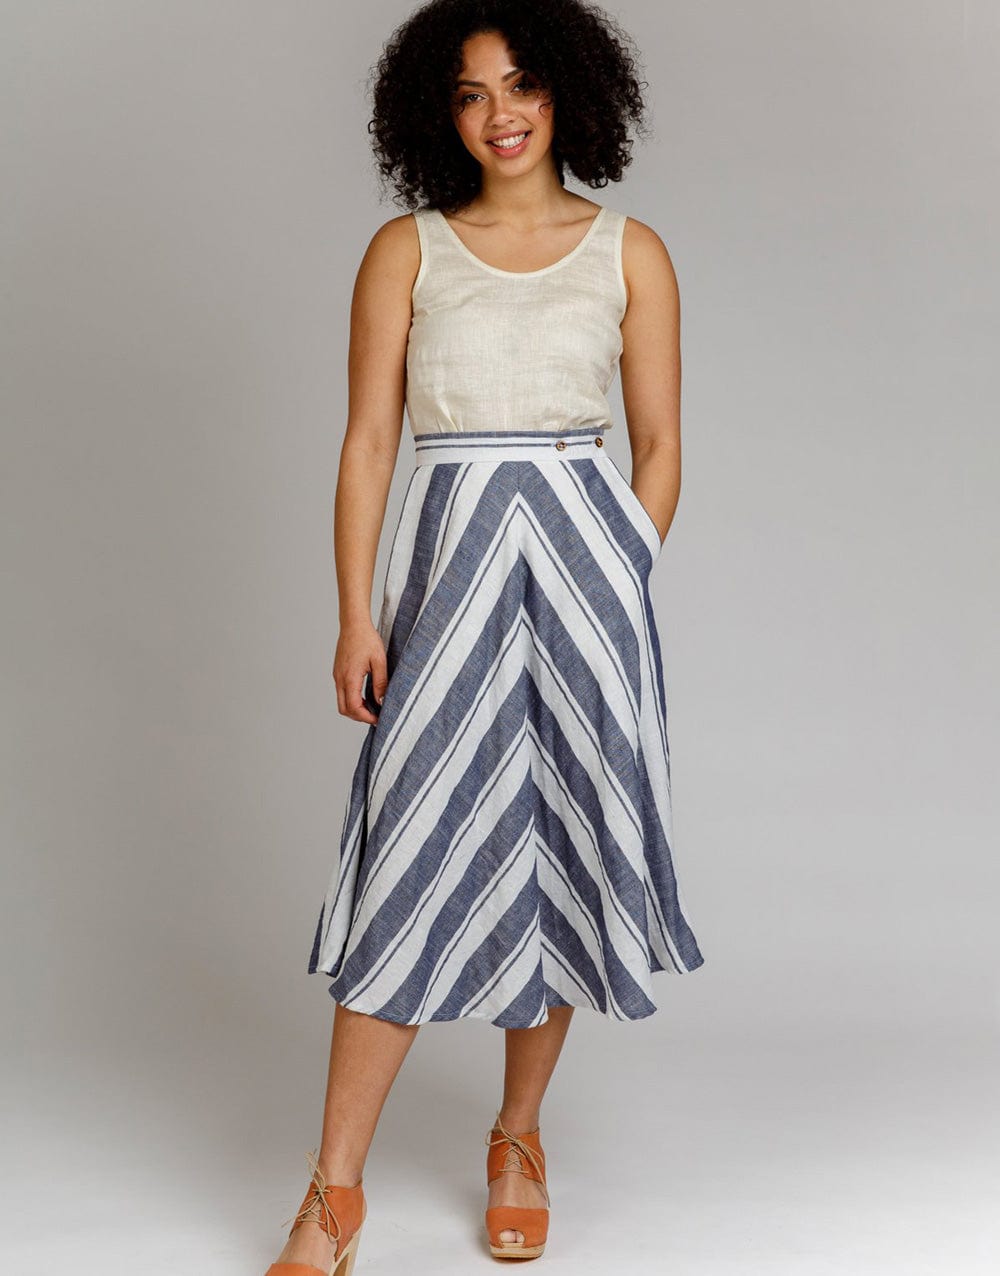 Wattle Skirt Sewing Pattern, Megan Nielsen – Clothkits